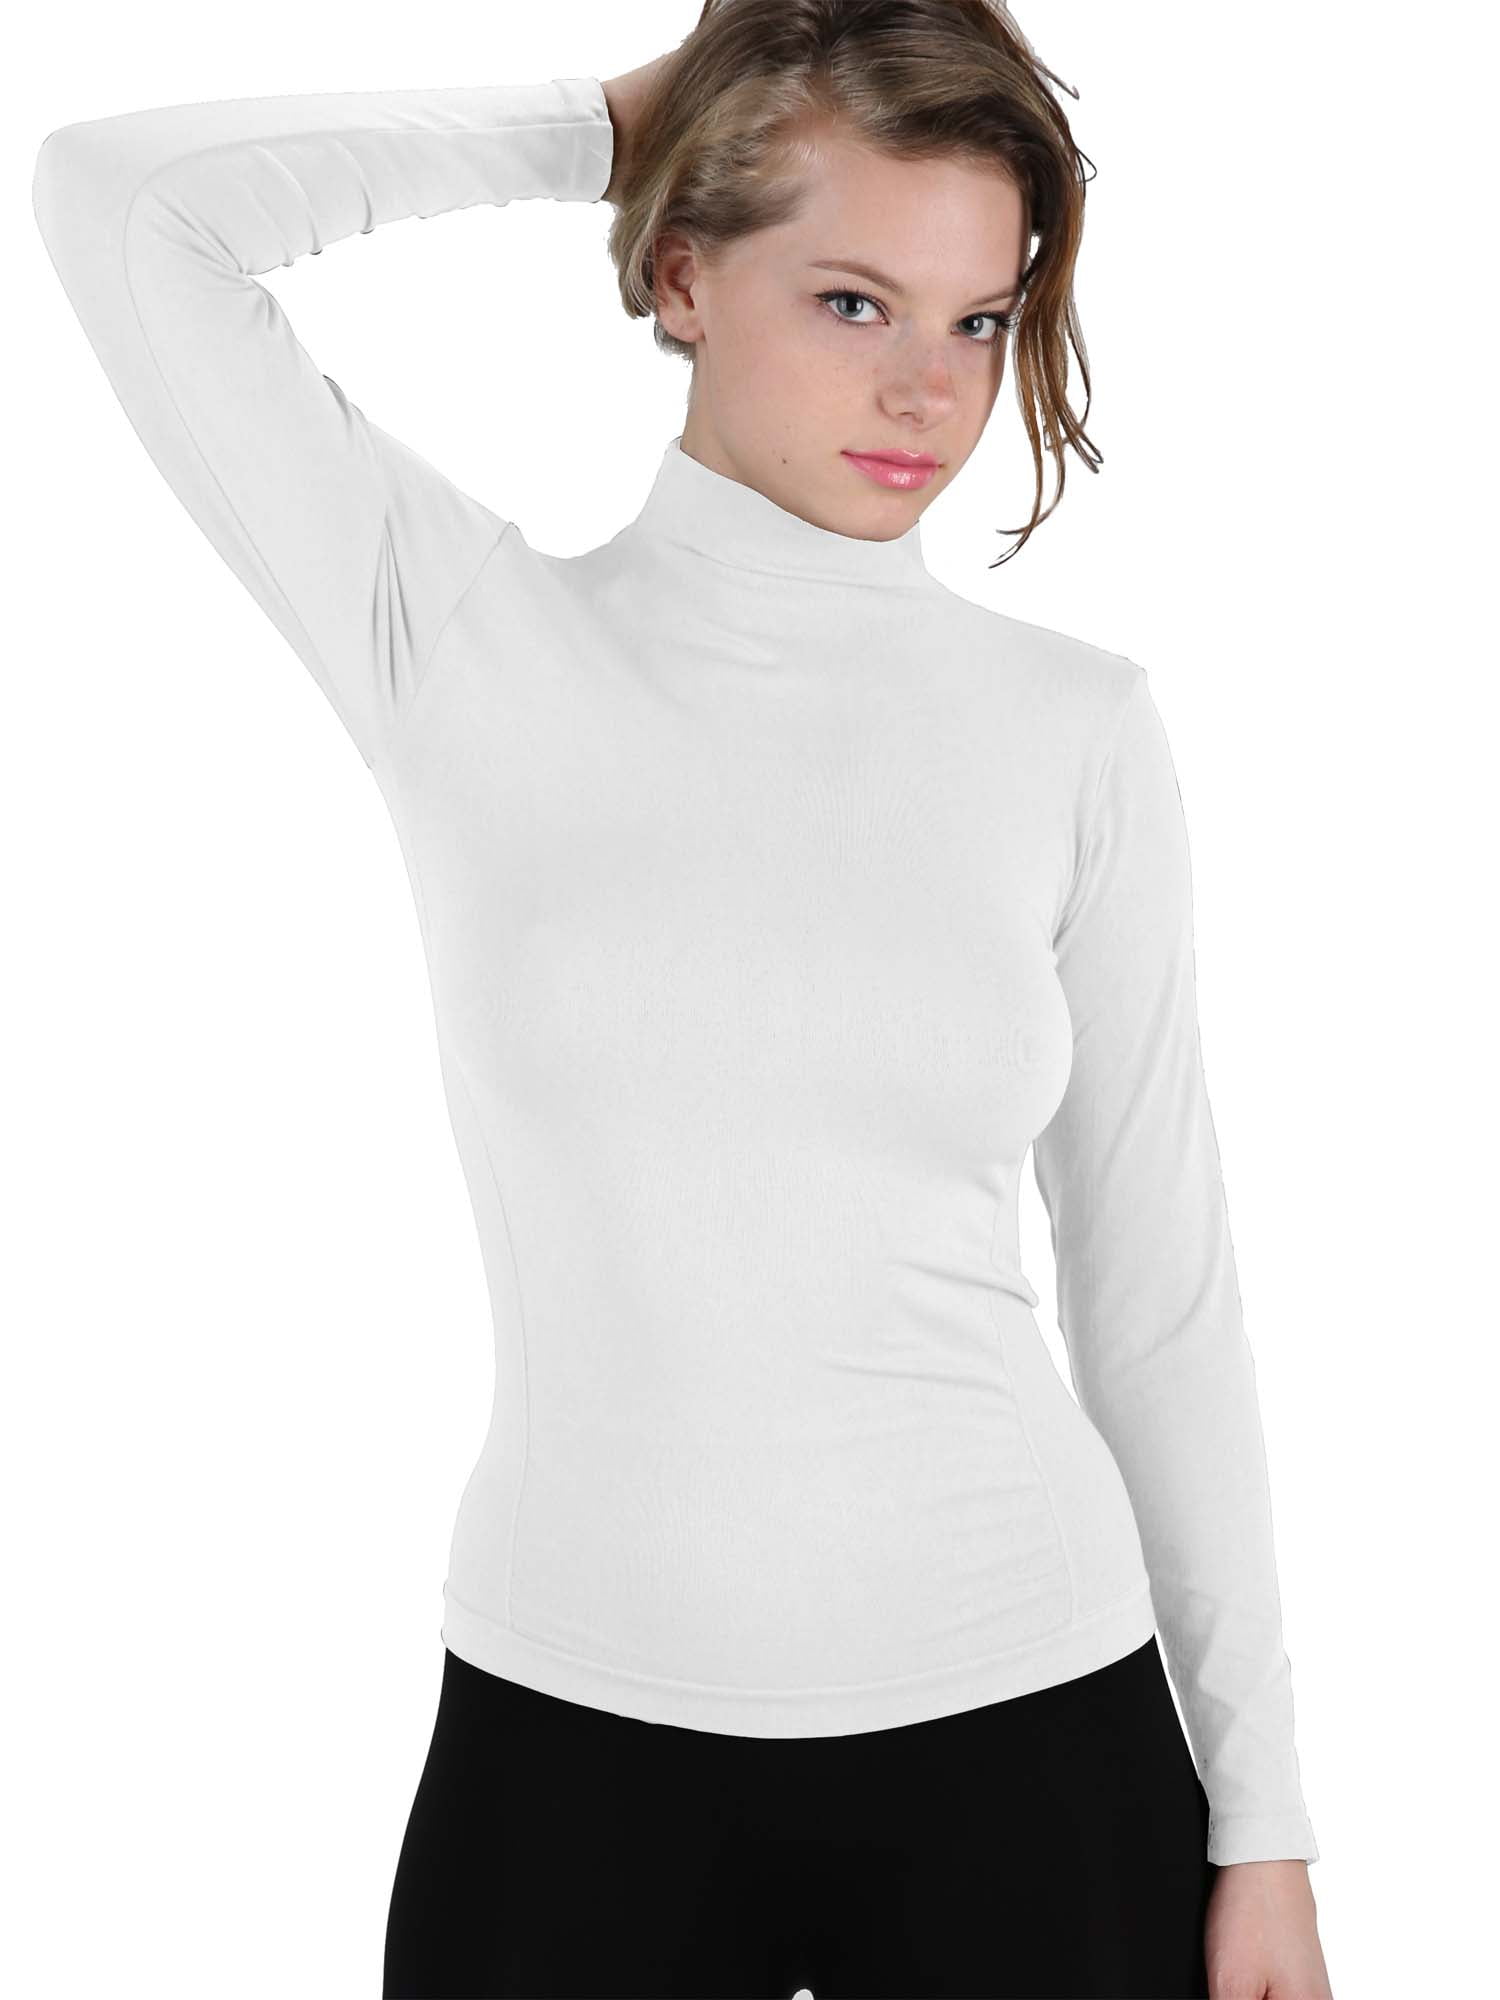 Hot Pin Break Out Style Tops Slim Turtleneck T Shirt Long Jumper New Blouse Sleeve Women Cotton